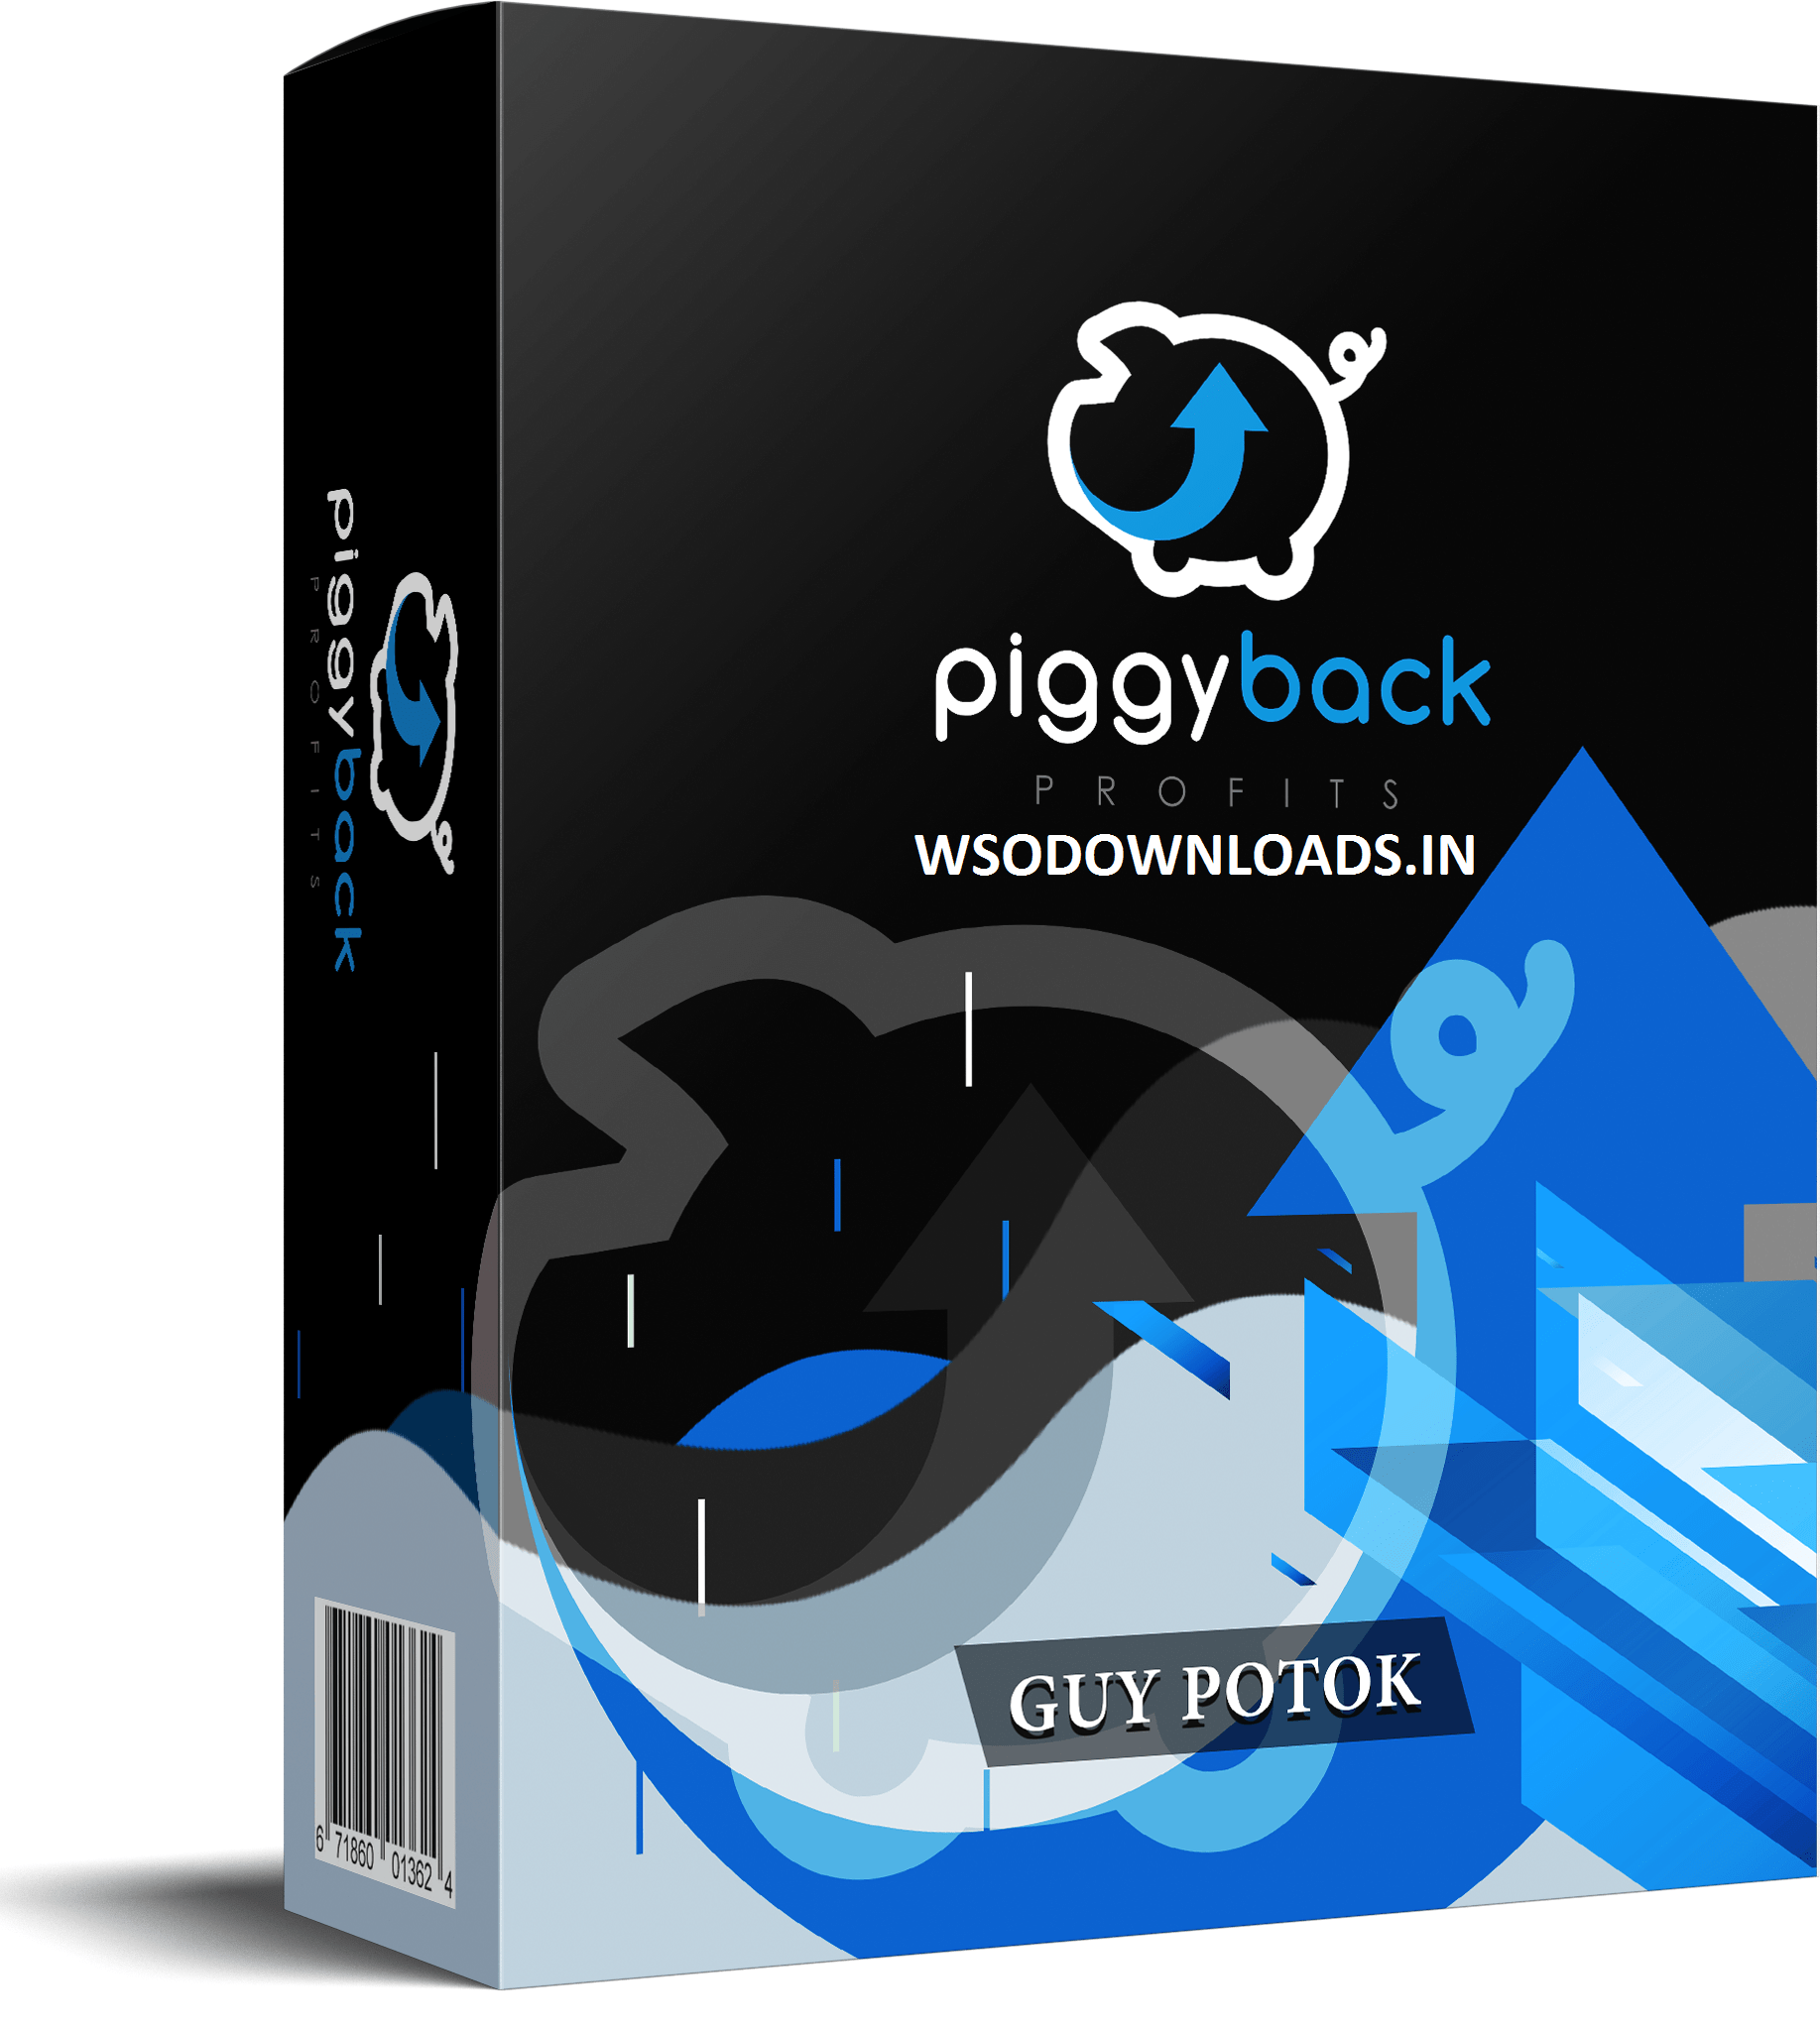 [GET] Piggyback Profits Download